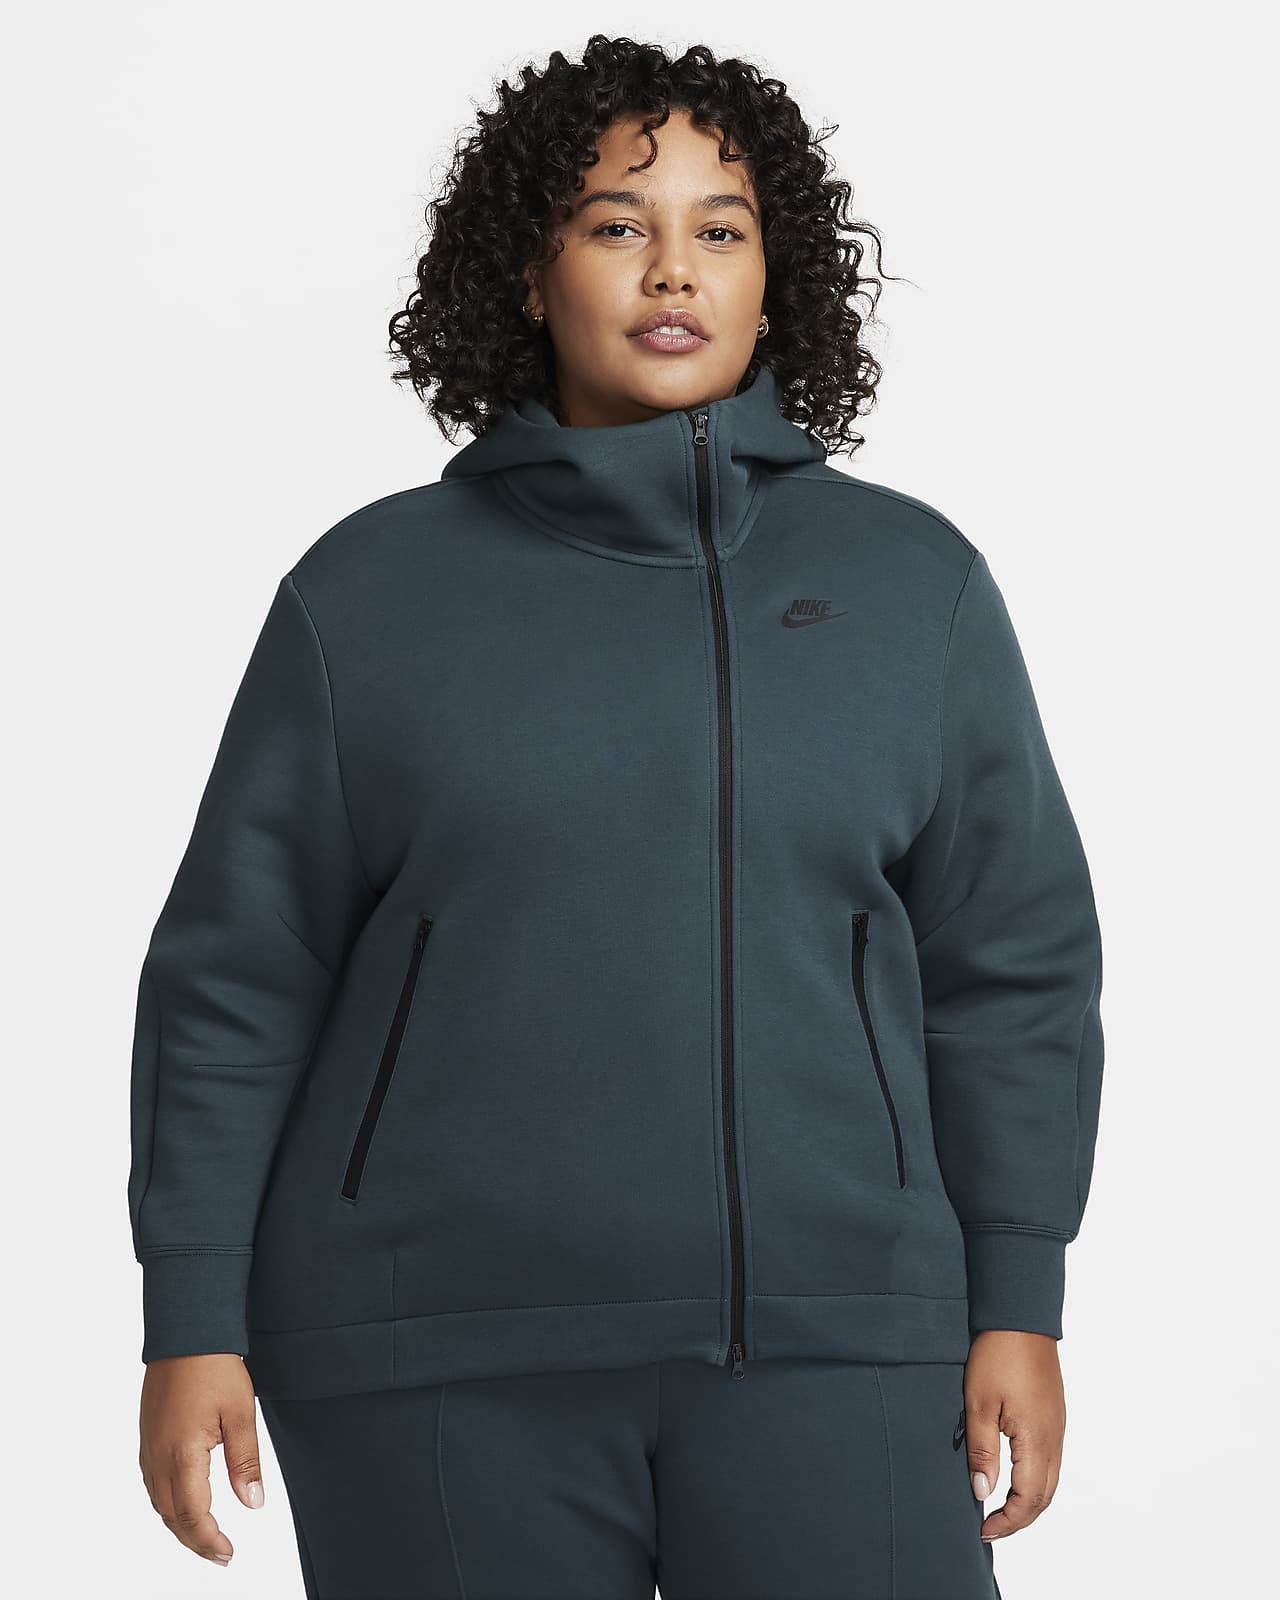 Sudadera con gorro oversized de cierre completo para mujer Nike Sportswear Tech Fleece (talla grande)